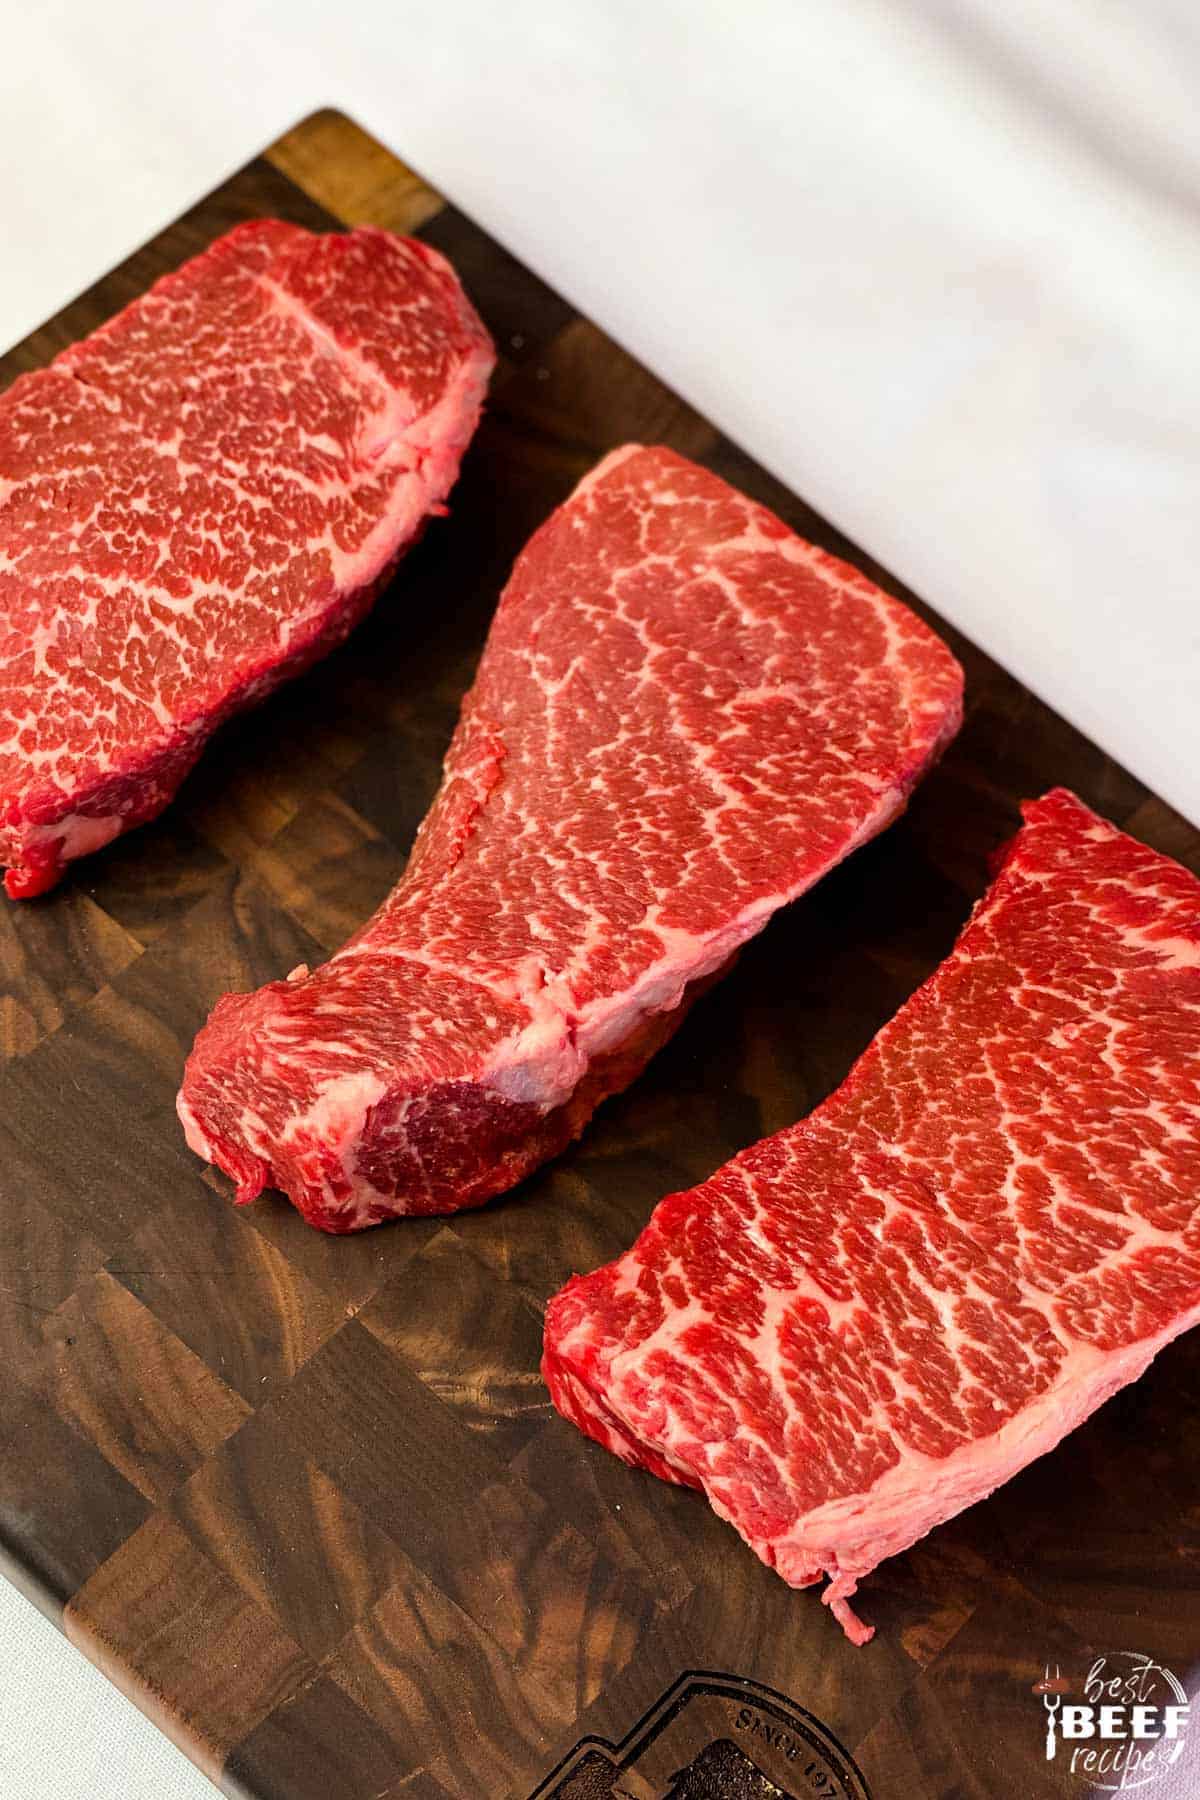 Three beautifully marbled beef short ribs on a cutting board